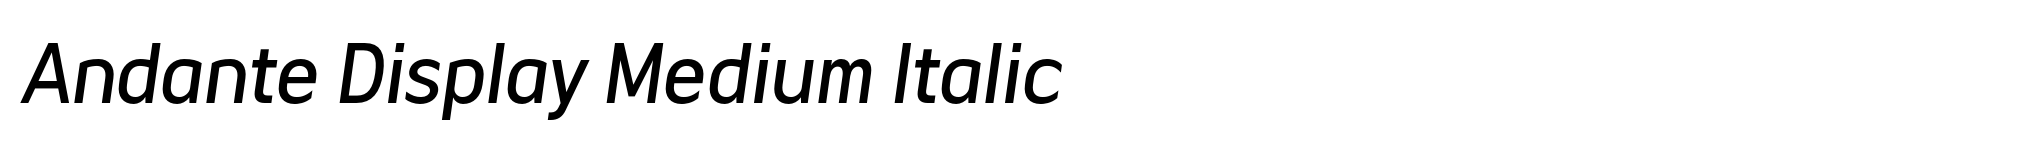 Andante Display Medium Italic image